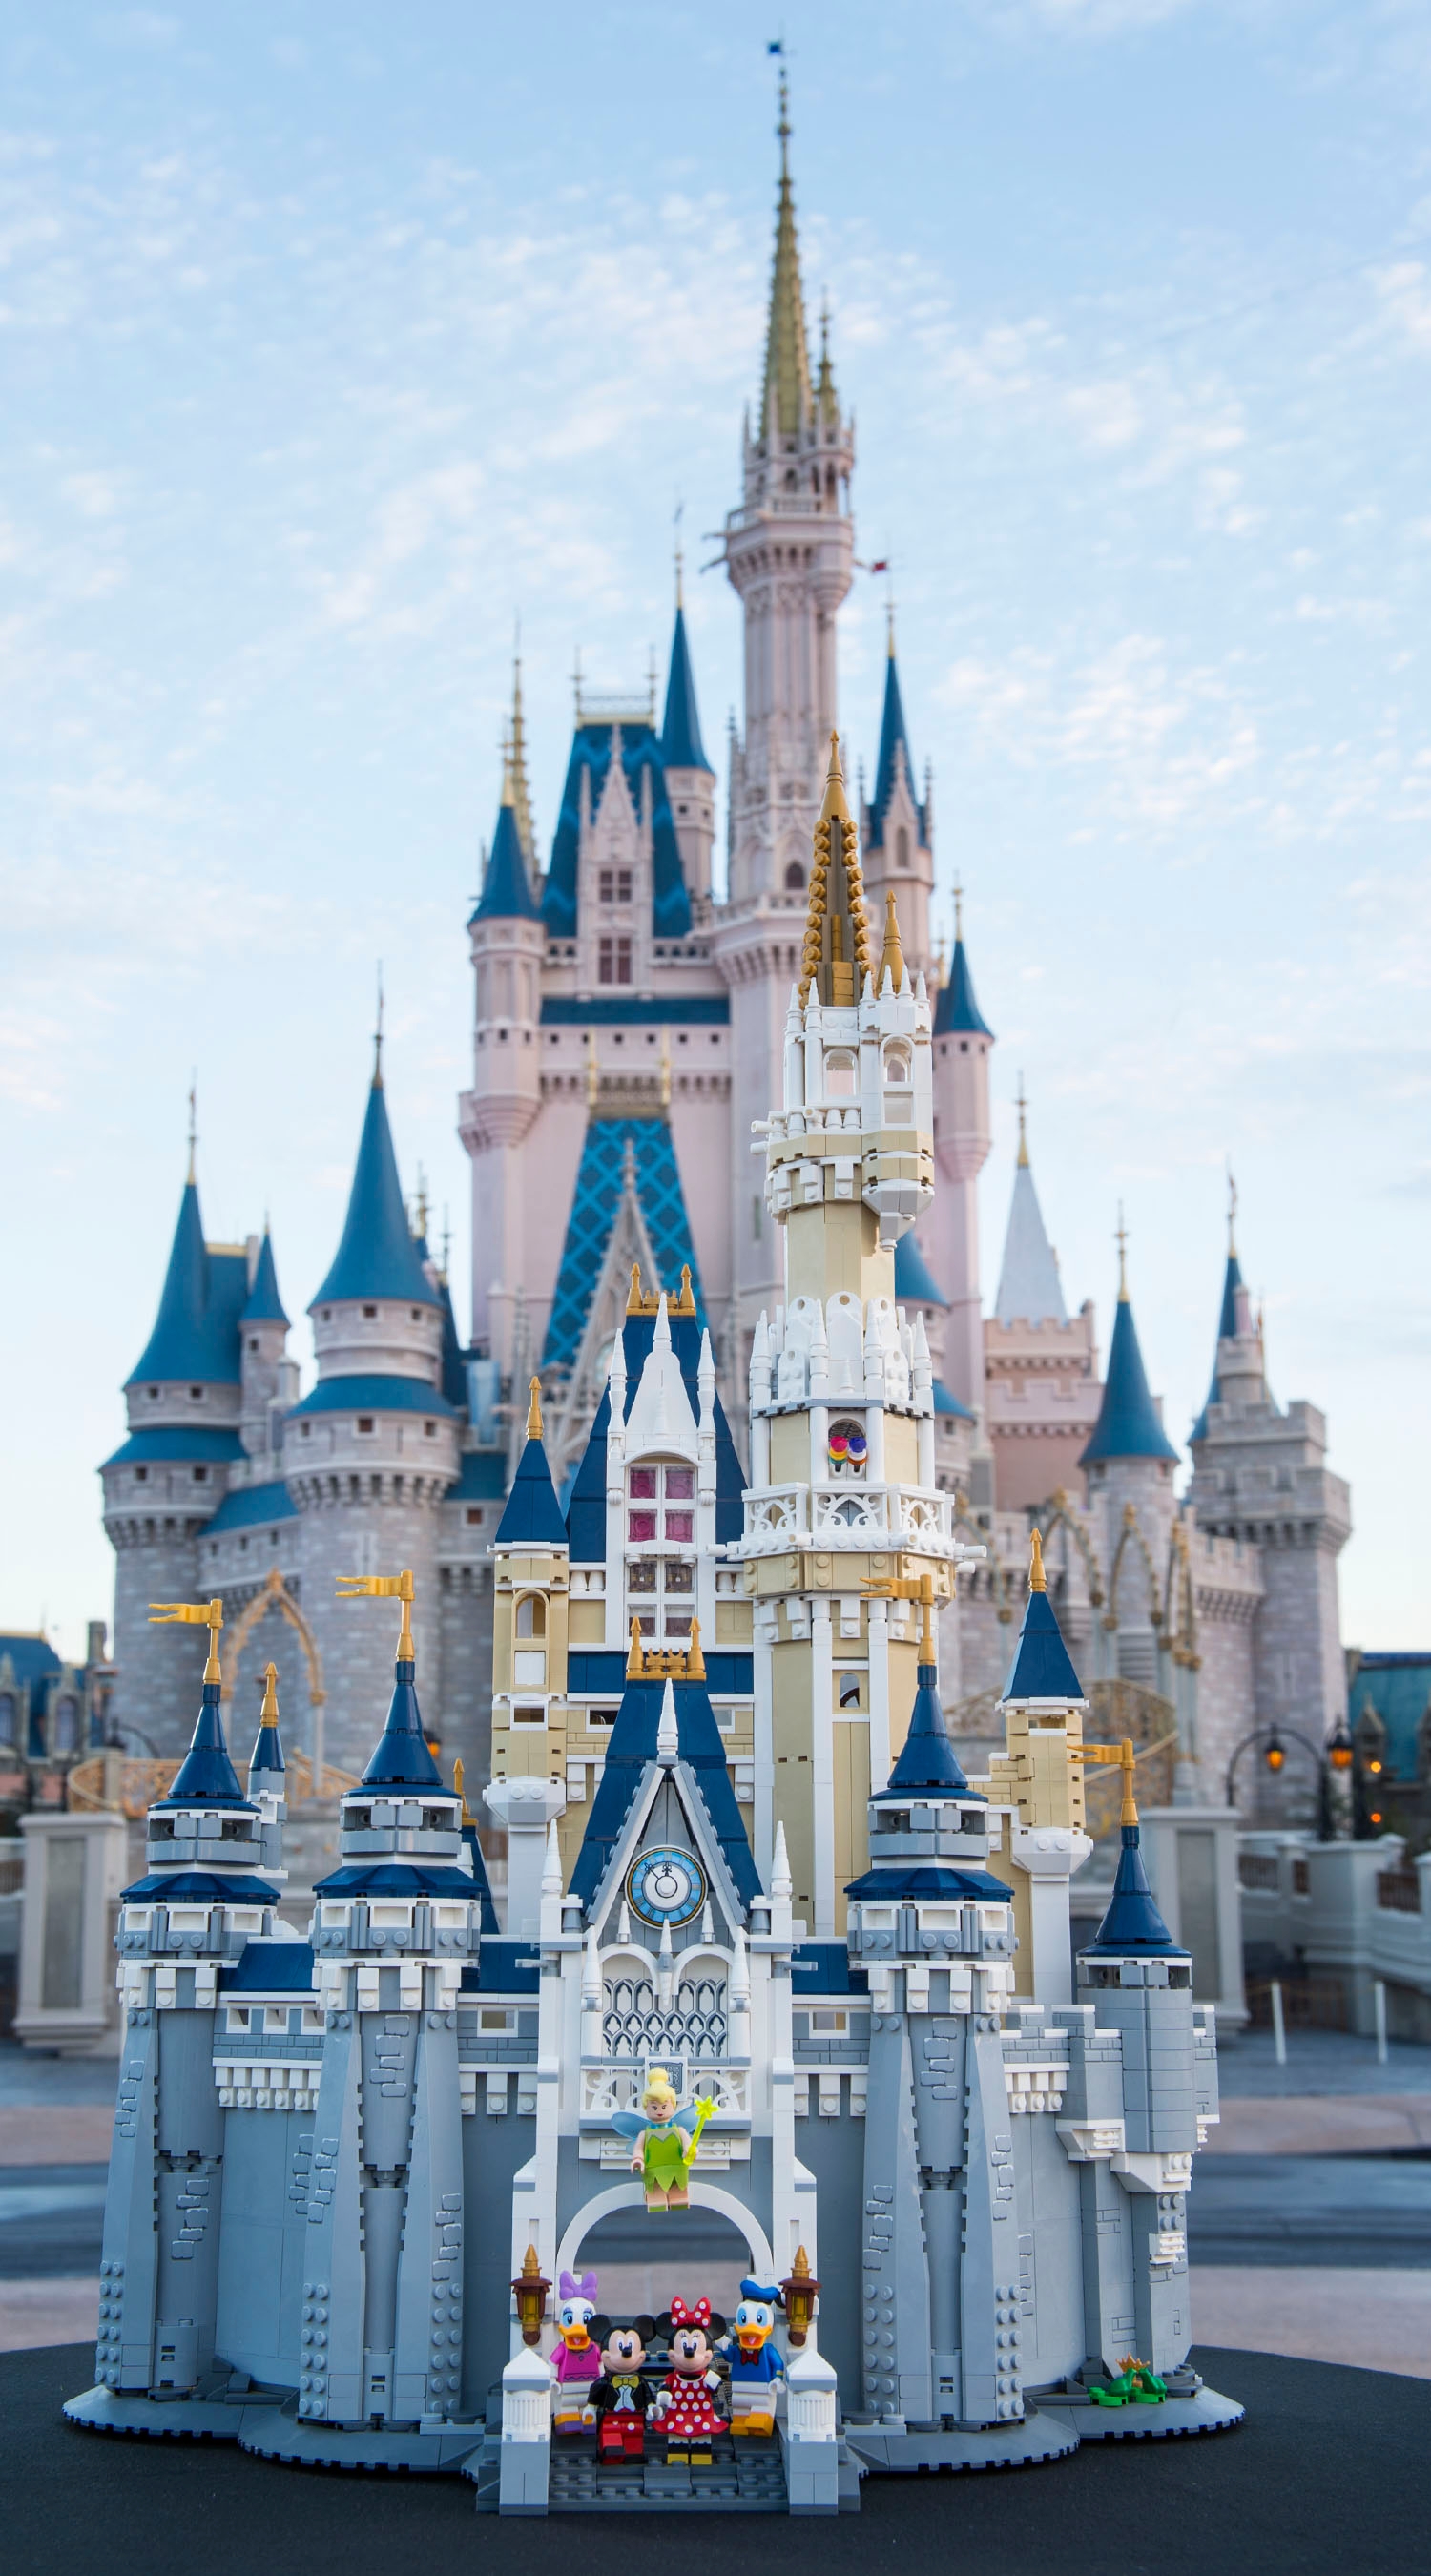 Lego Disney Castle Size